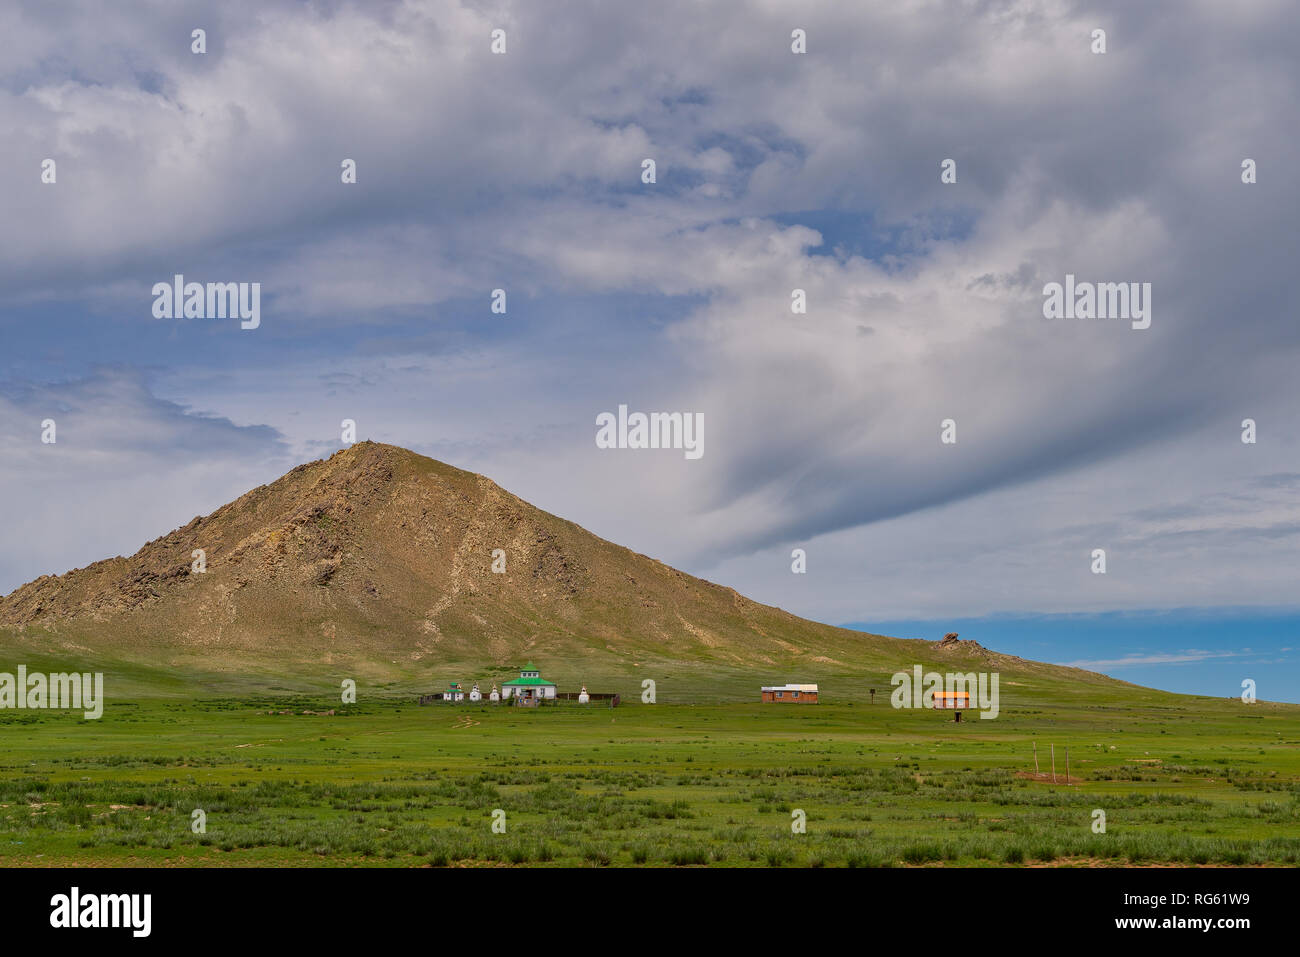 Temple in rural landscape, Mongolia Stock Photo